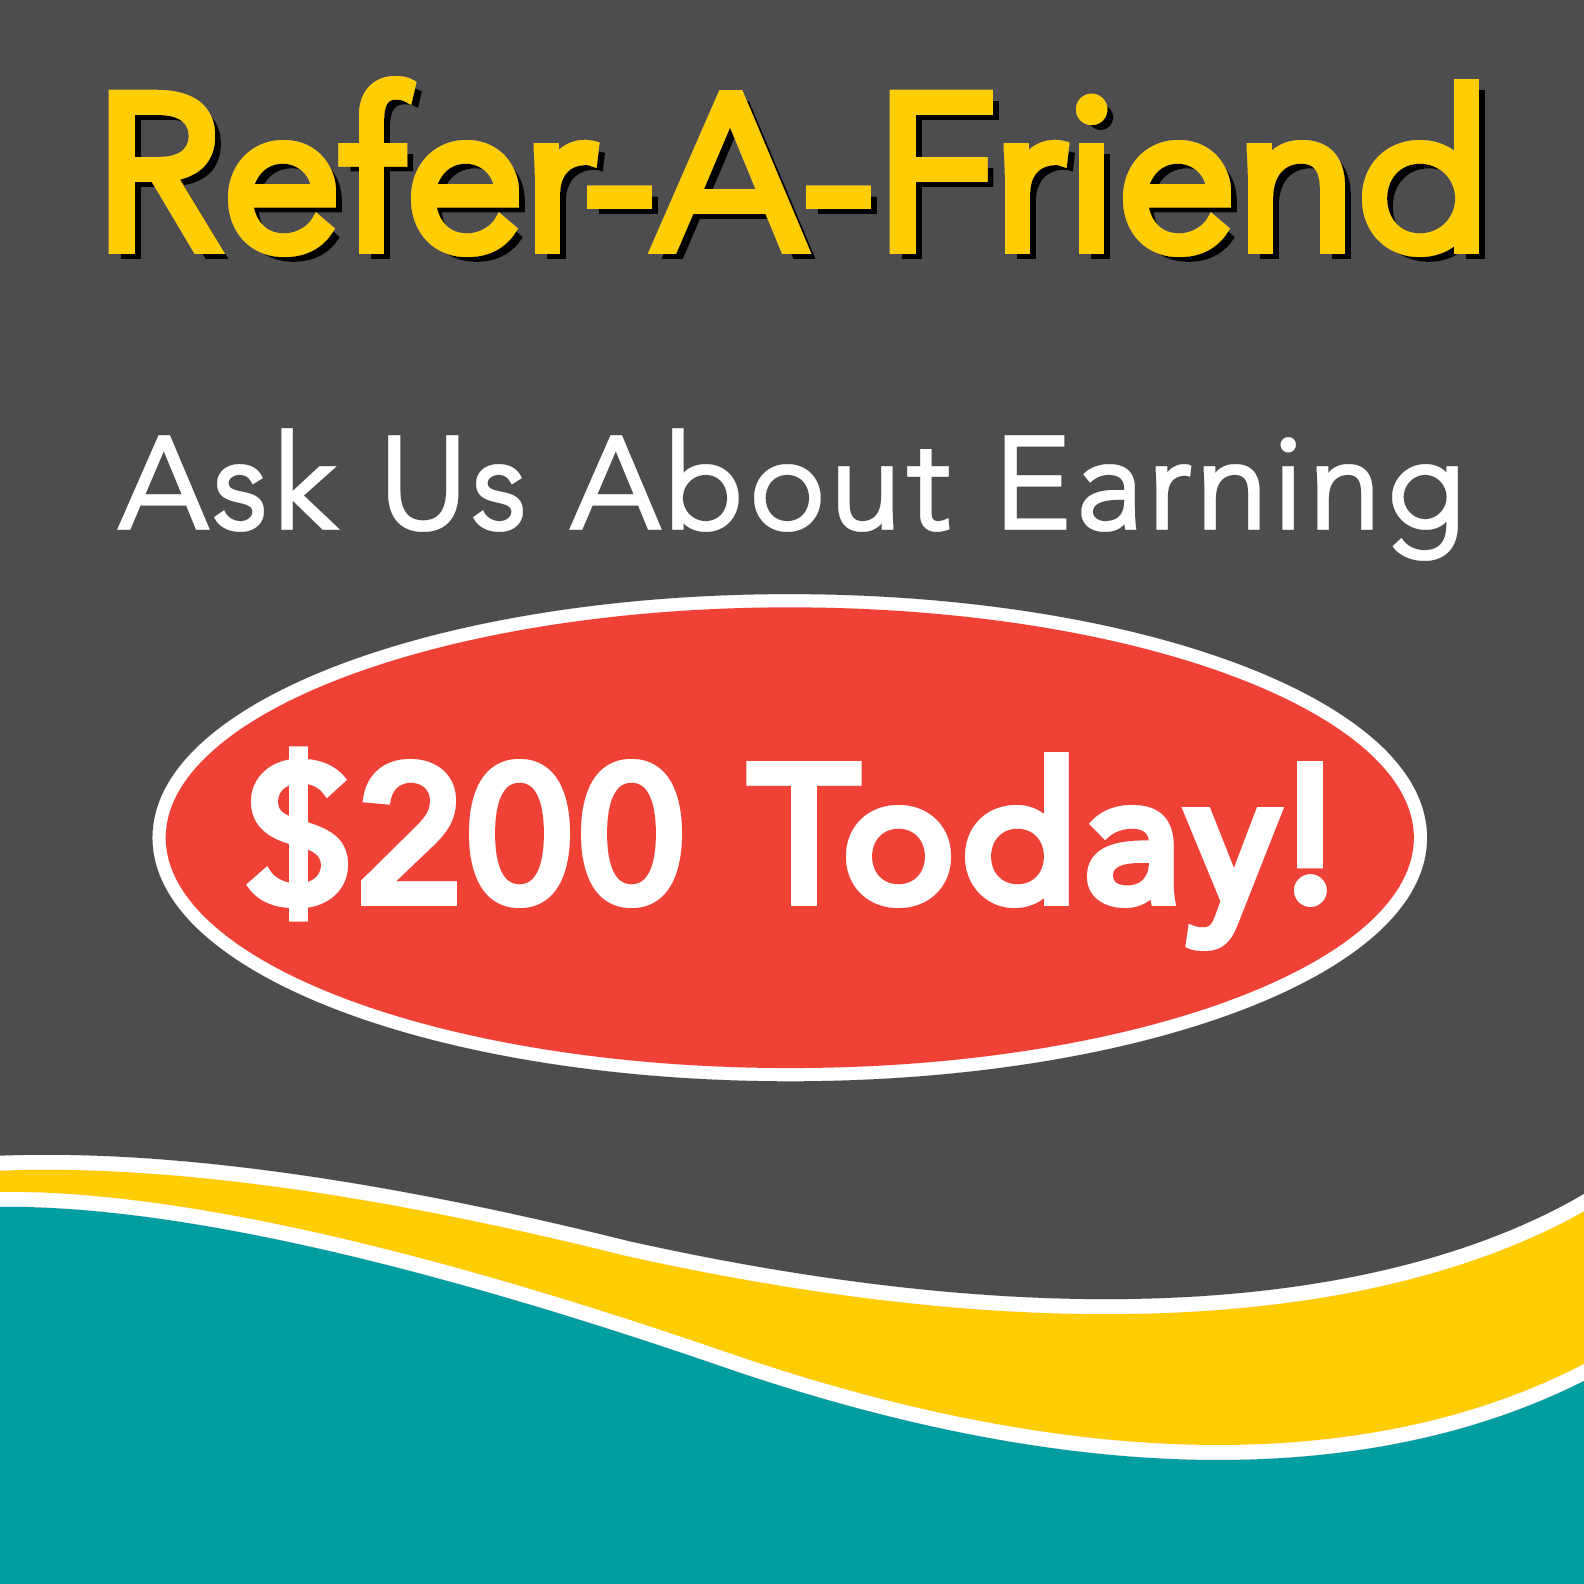 Refer-A-Friend flyer